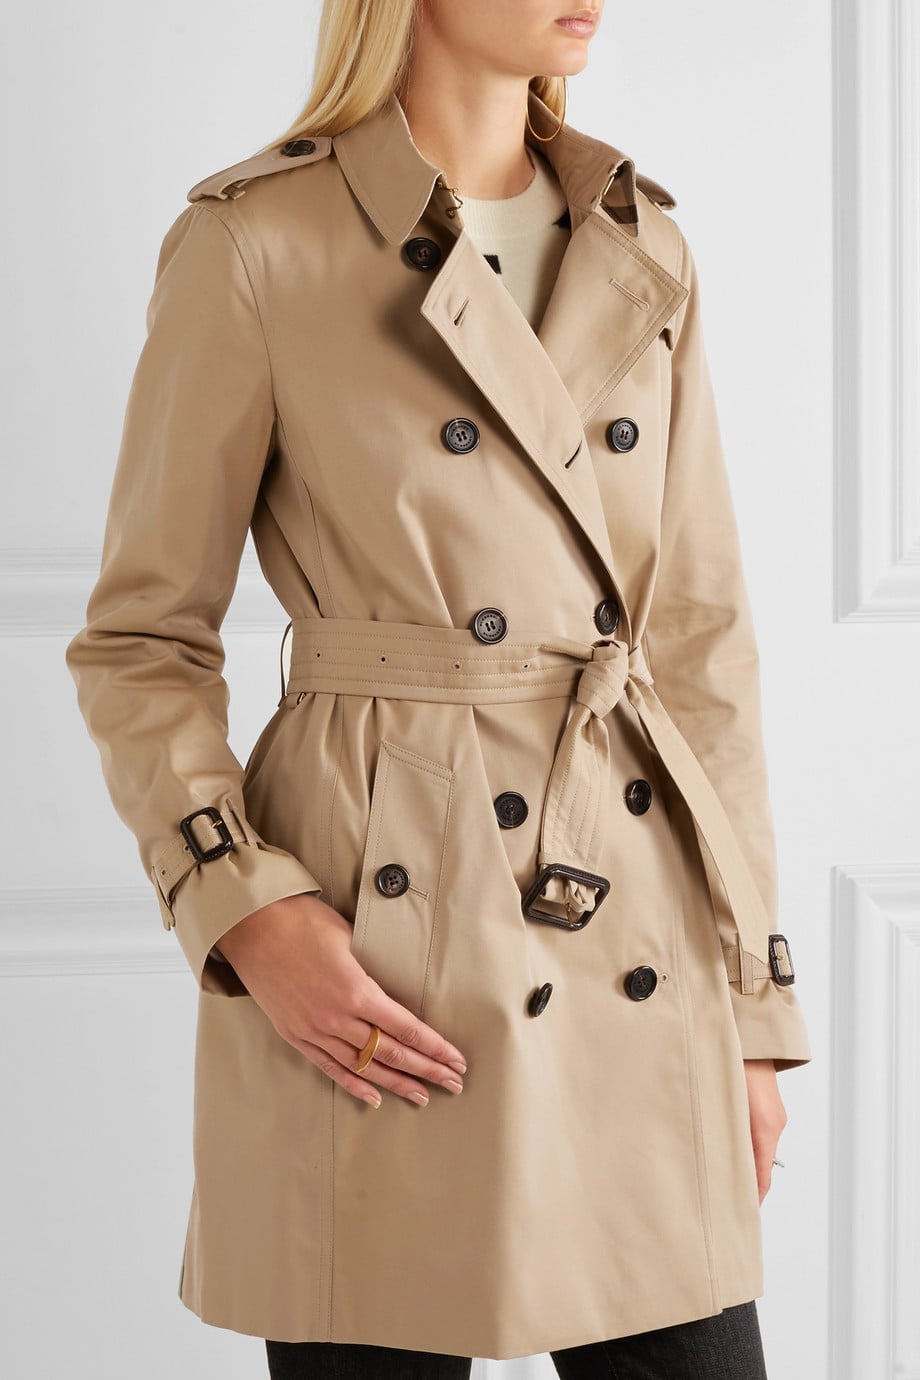 burberry cotton gabardine trench coat